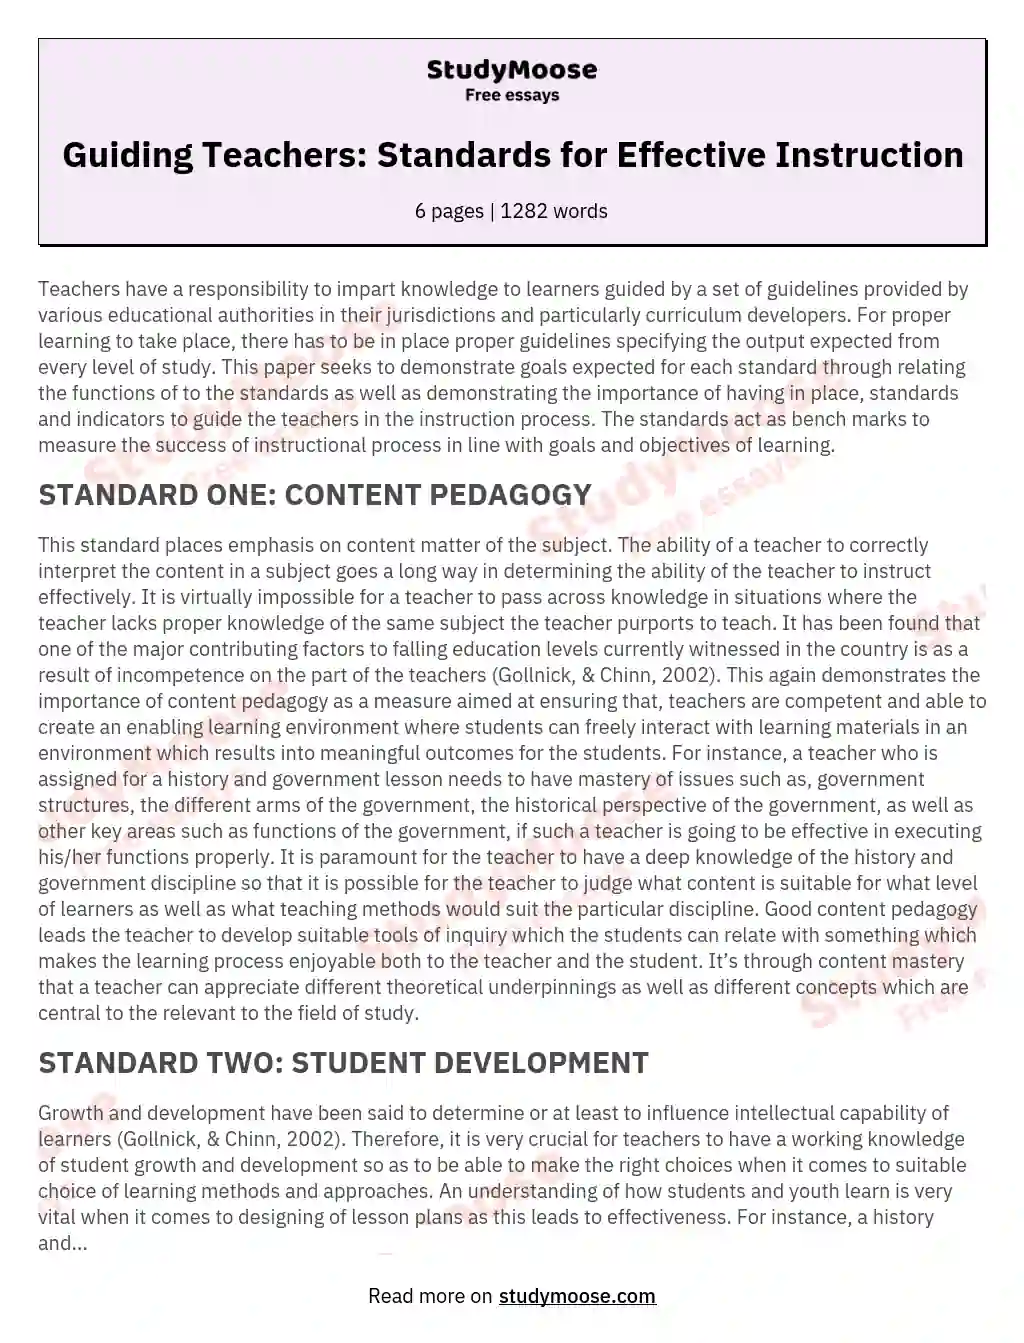 Guiding Teachers: Standards for Effective Instruction essay